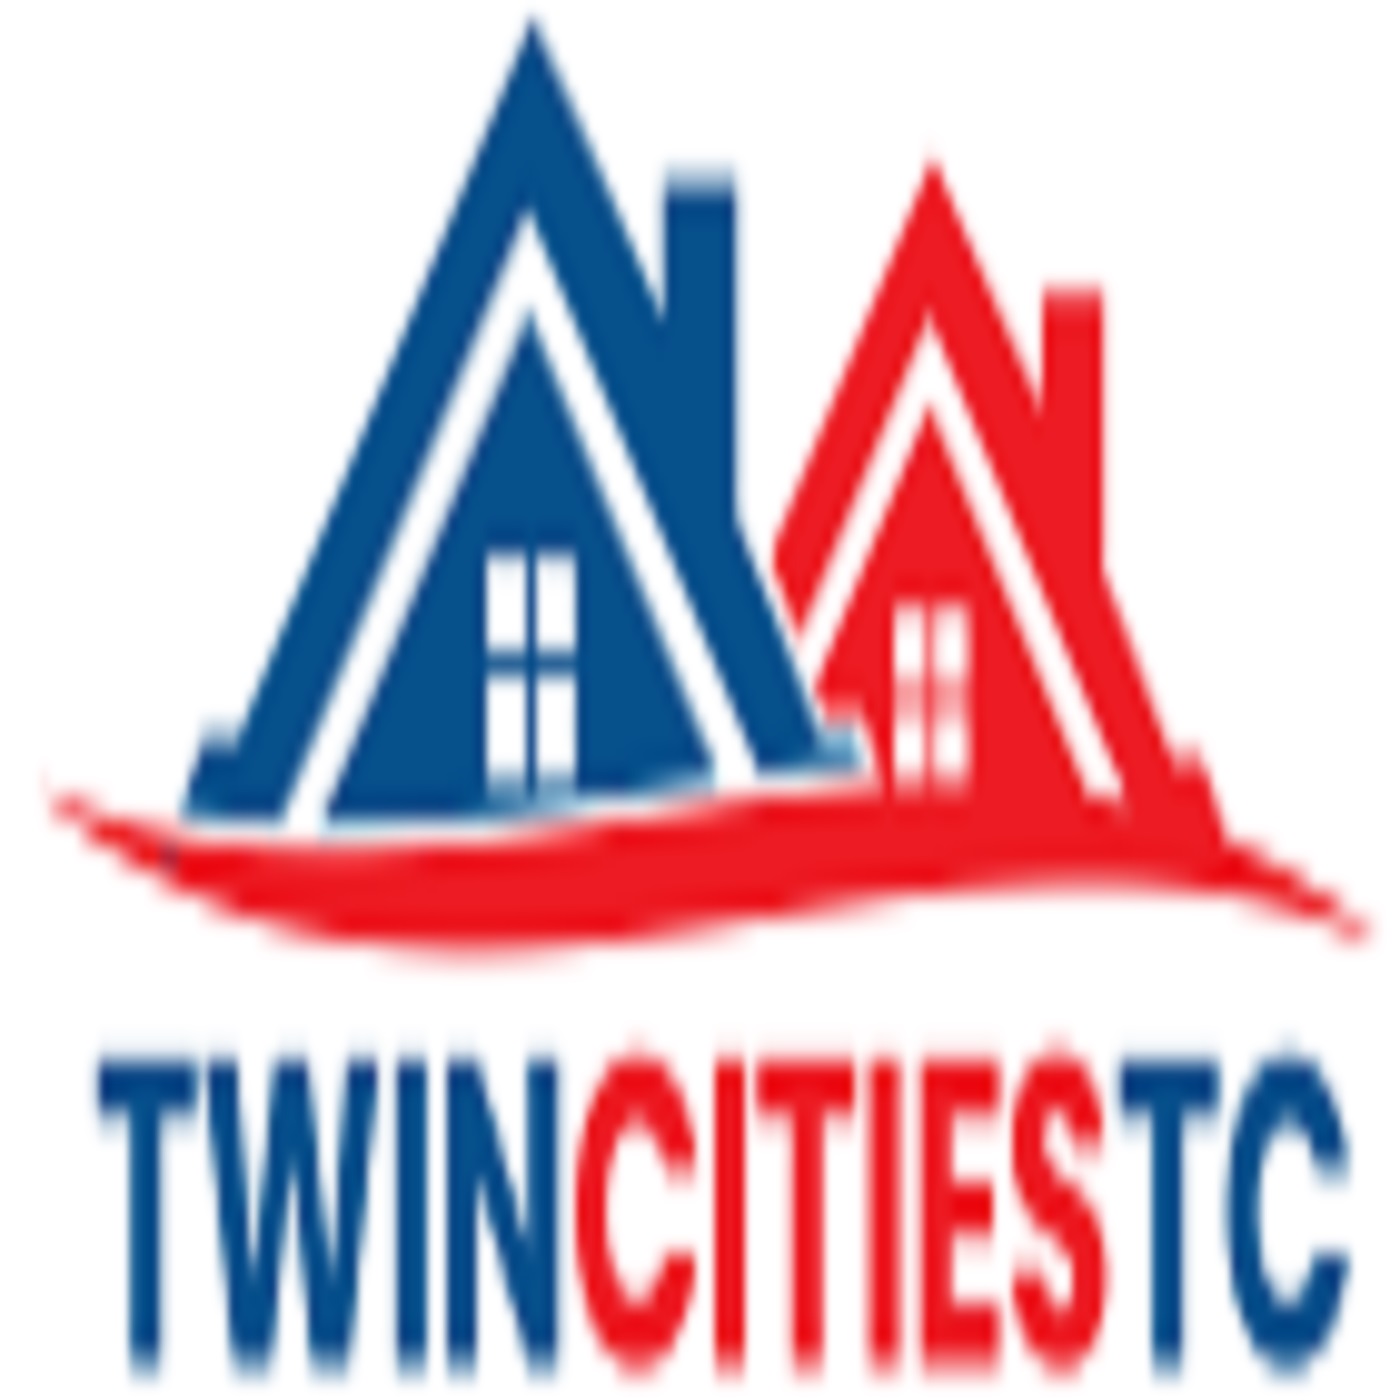 Twin Cities TC